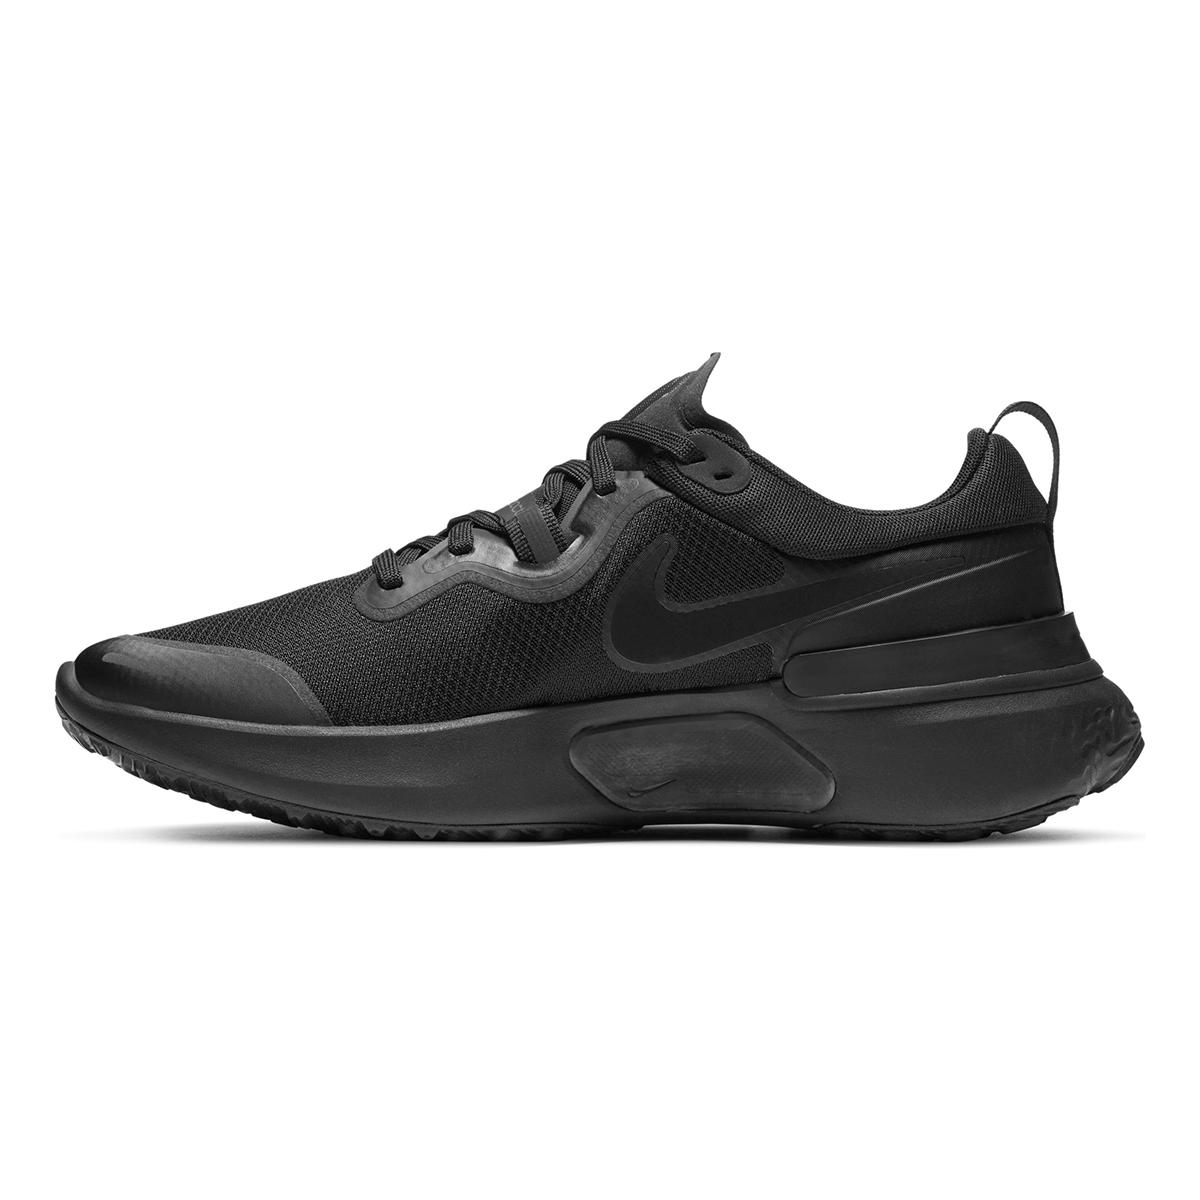 Nike React Miler Running Shoe for $65 Shipped